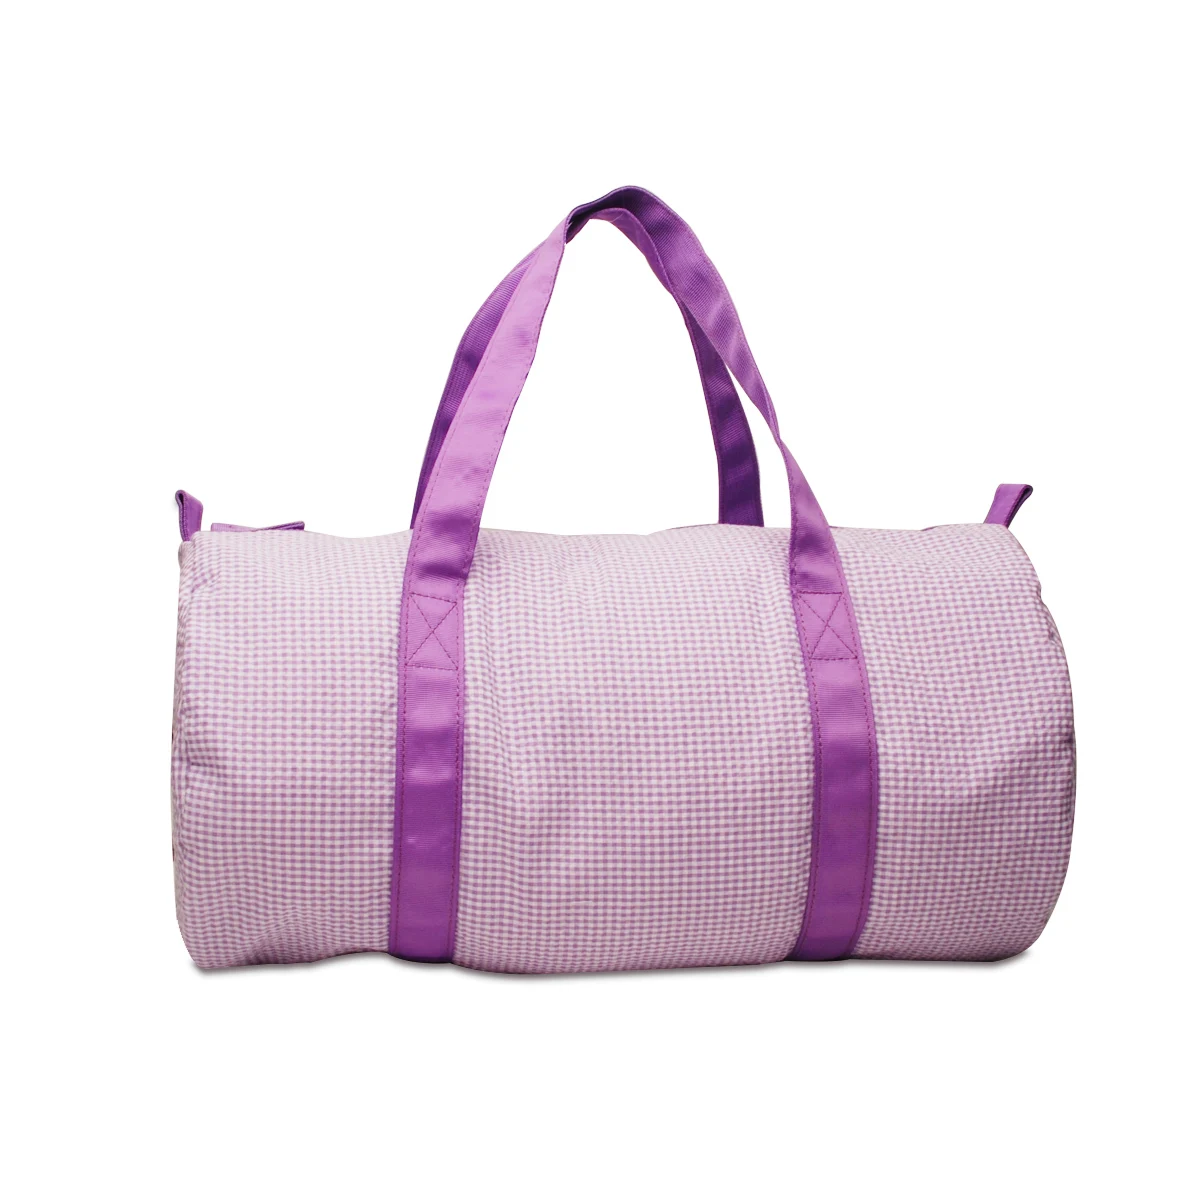 6PCS Samples Kids Travel Overnight Bag Seersucker Carry On Lightweight Weekender Duffel Bag For Children DOM112-1856